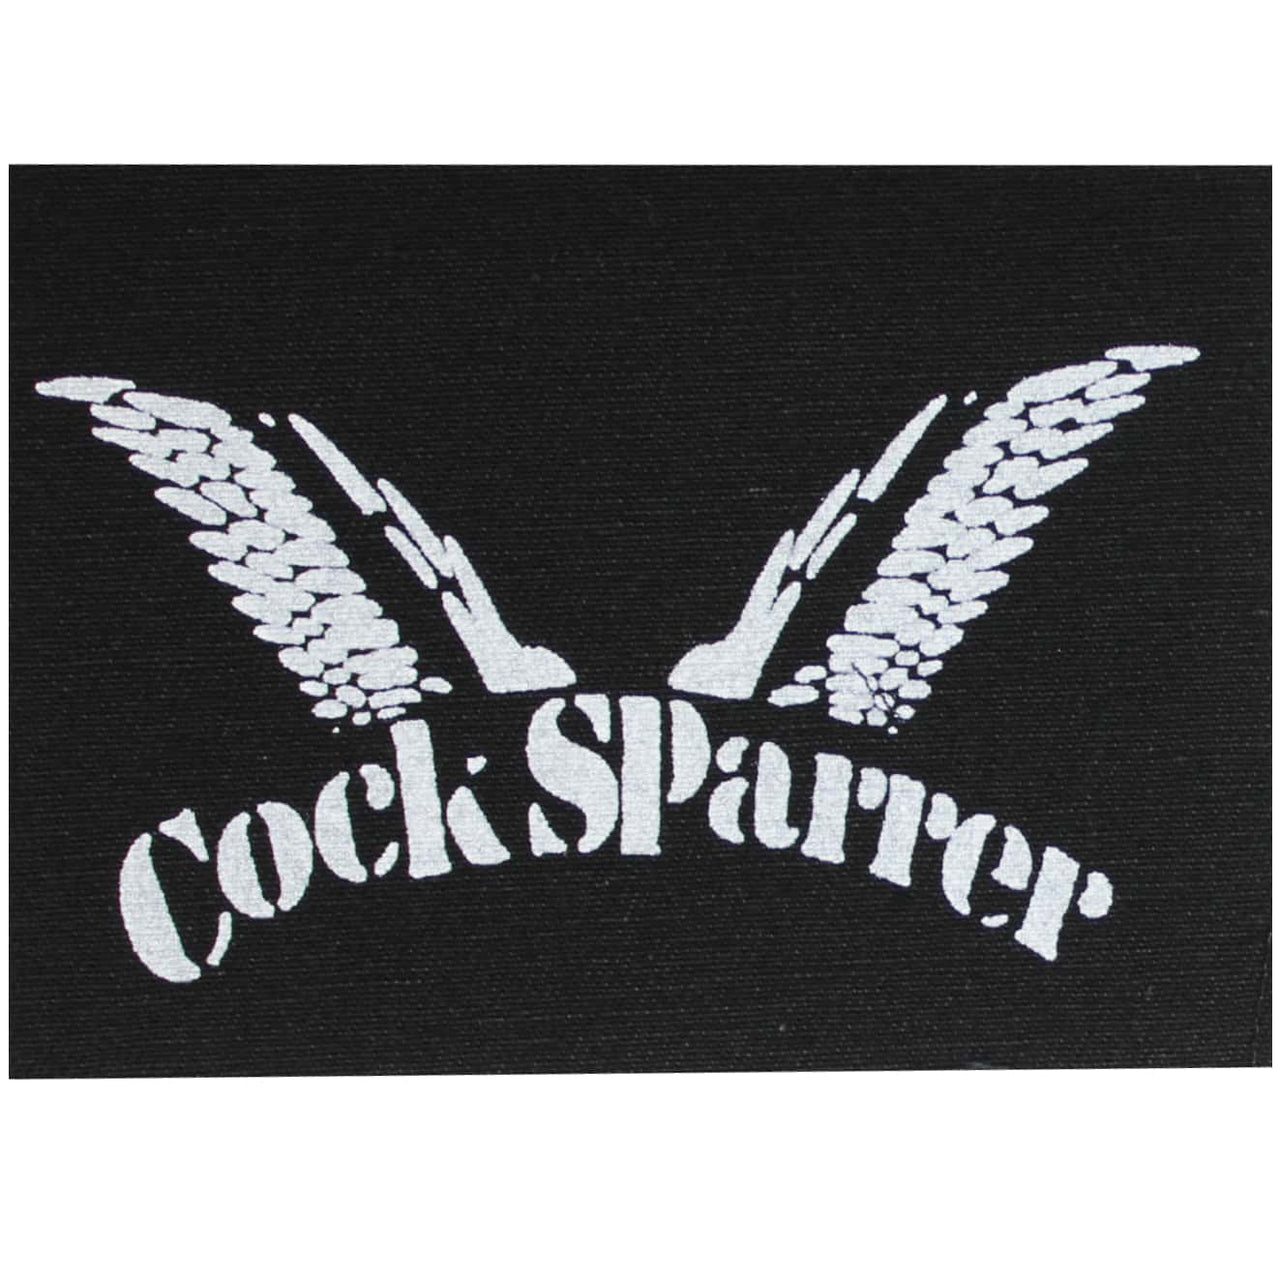 Cock Sparrer Cloth Patch